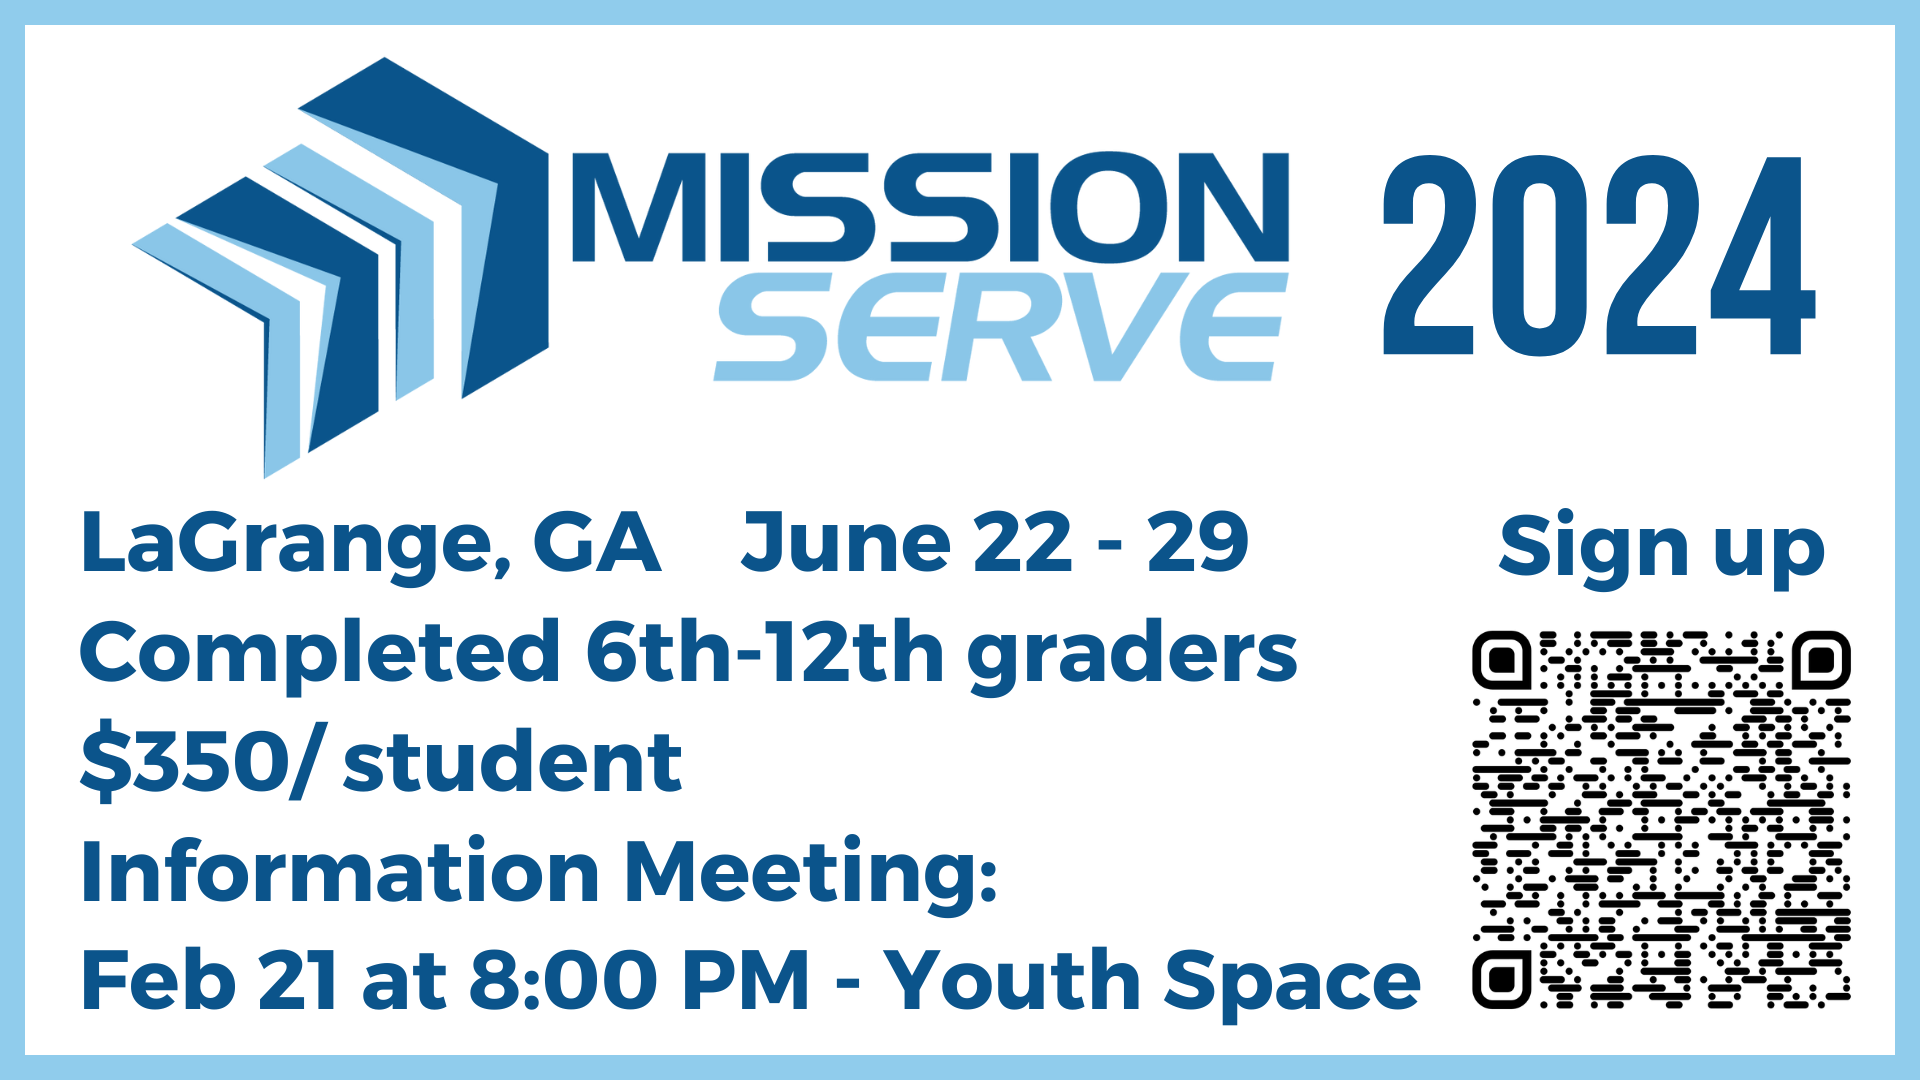 Mission Serve 2024. Missions in Georgia in June.